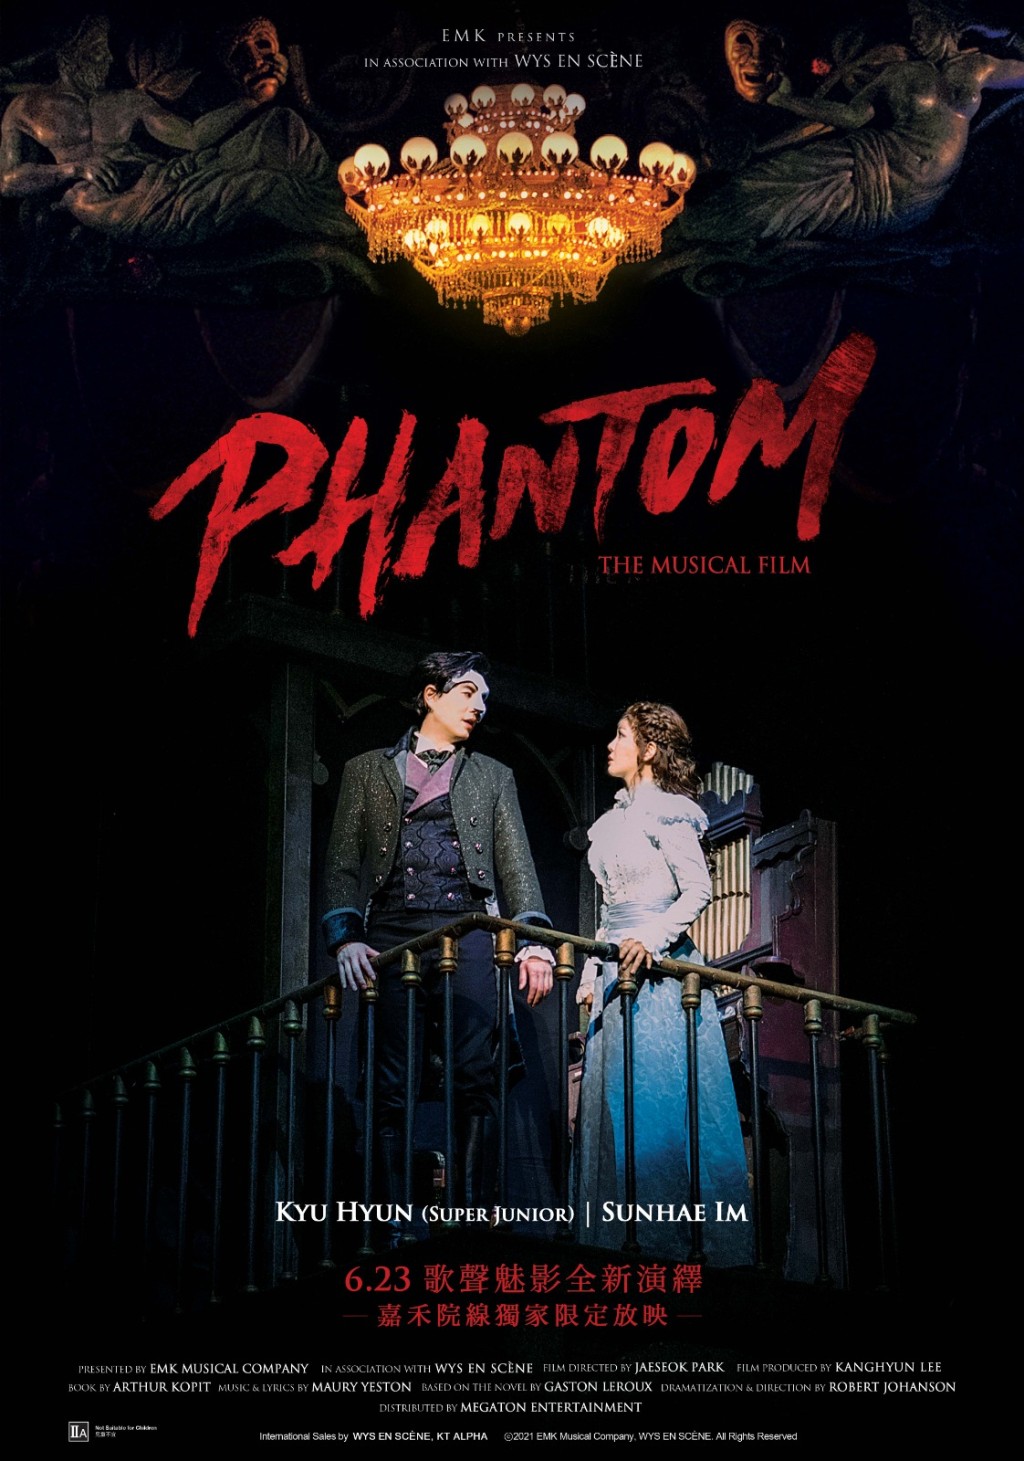 《PHANTOM THE MUSICAL FILM》將於6月23日在港上映。